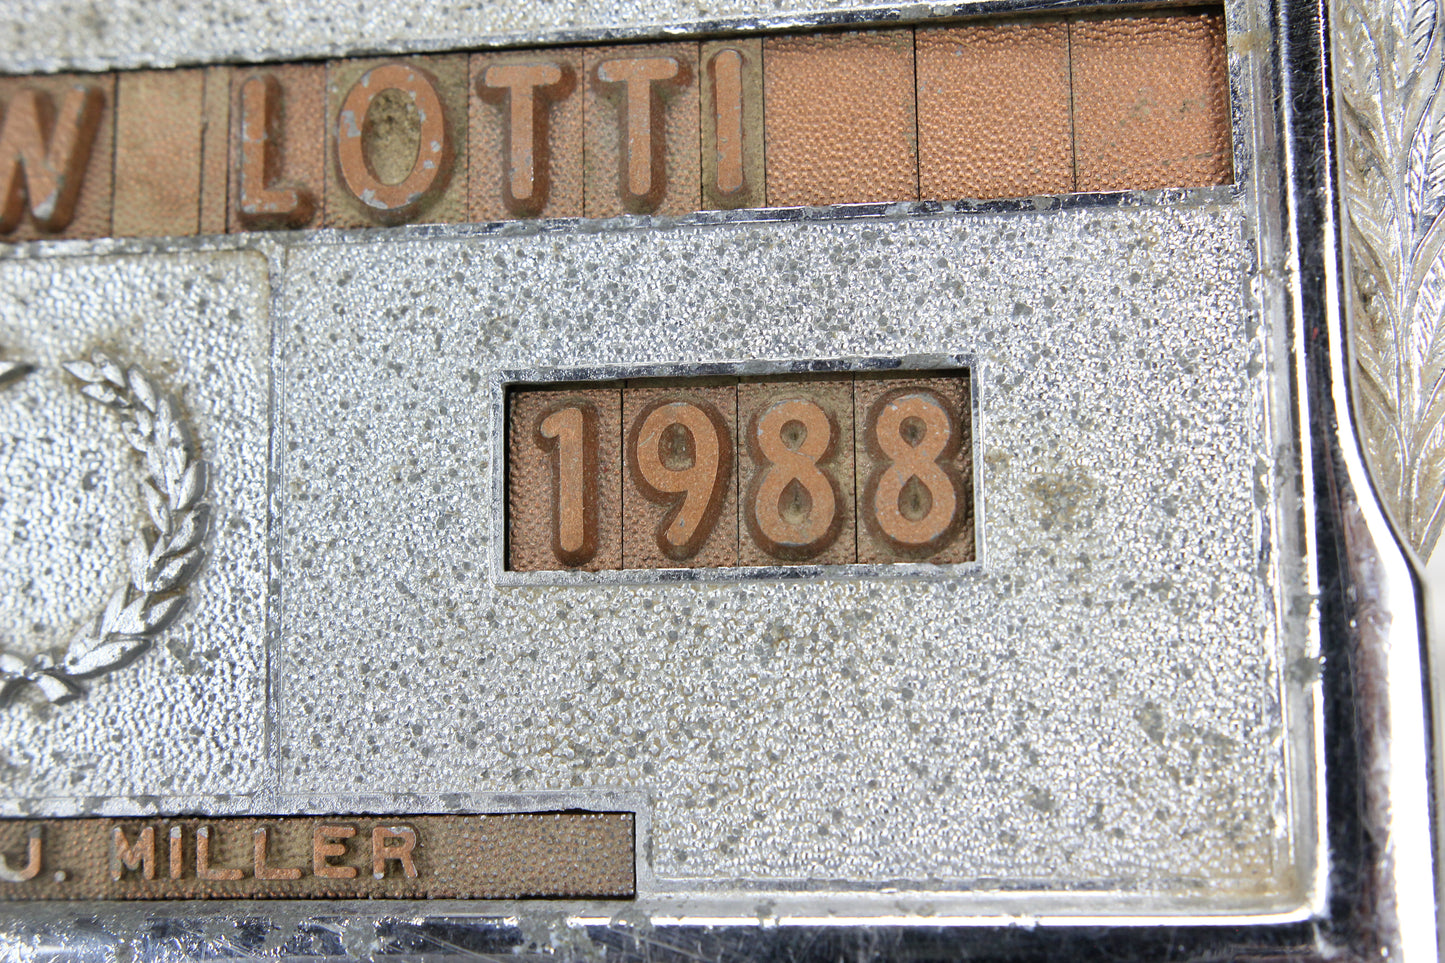 Ruby L. Lotti, 1907-1988, Funeral Temporary Grave Marker